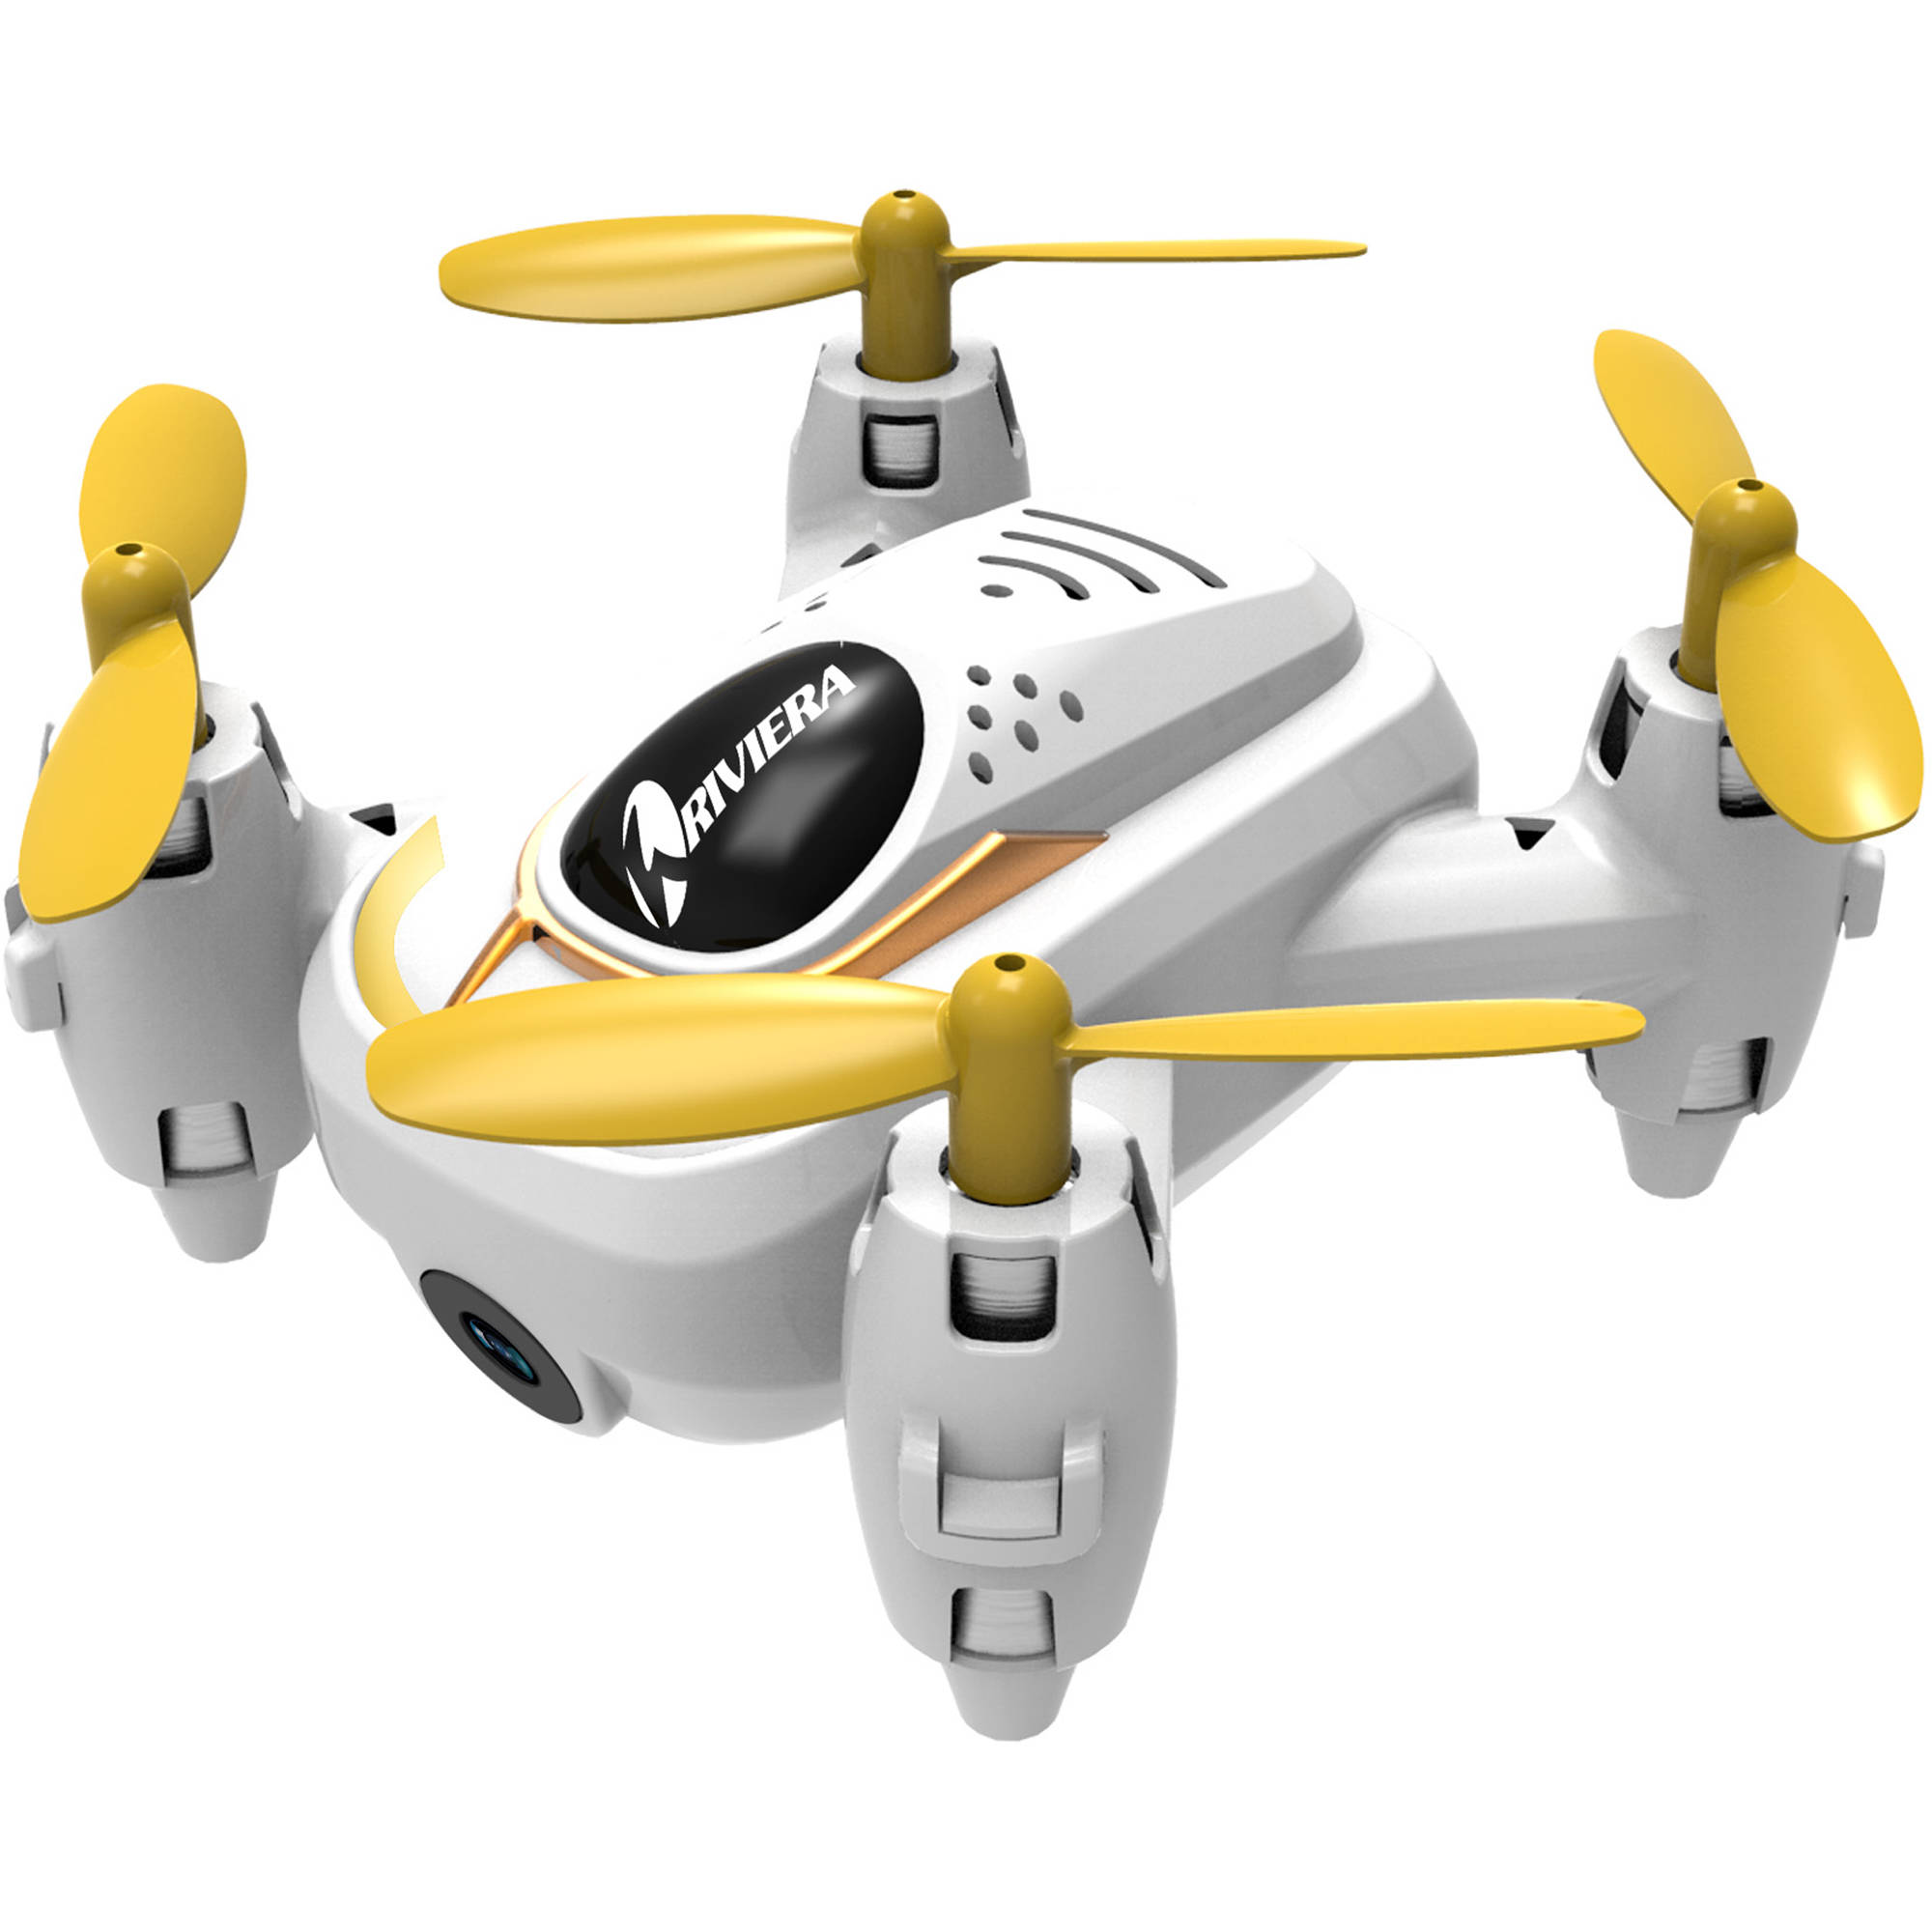 small quadcopter with camera